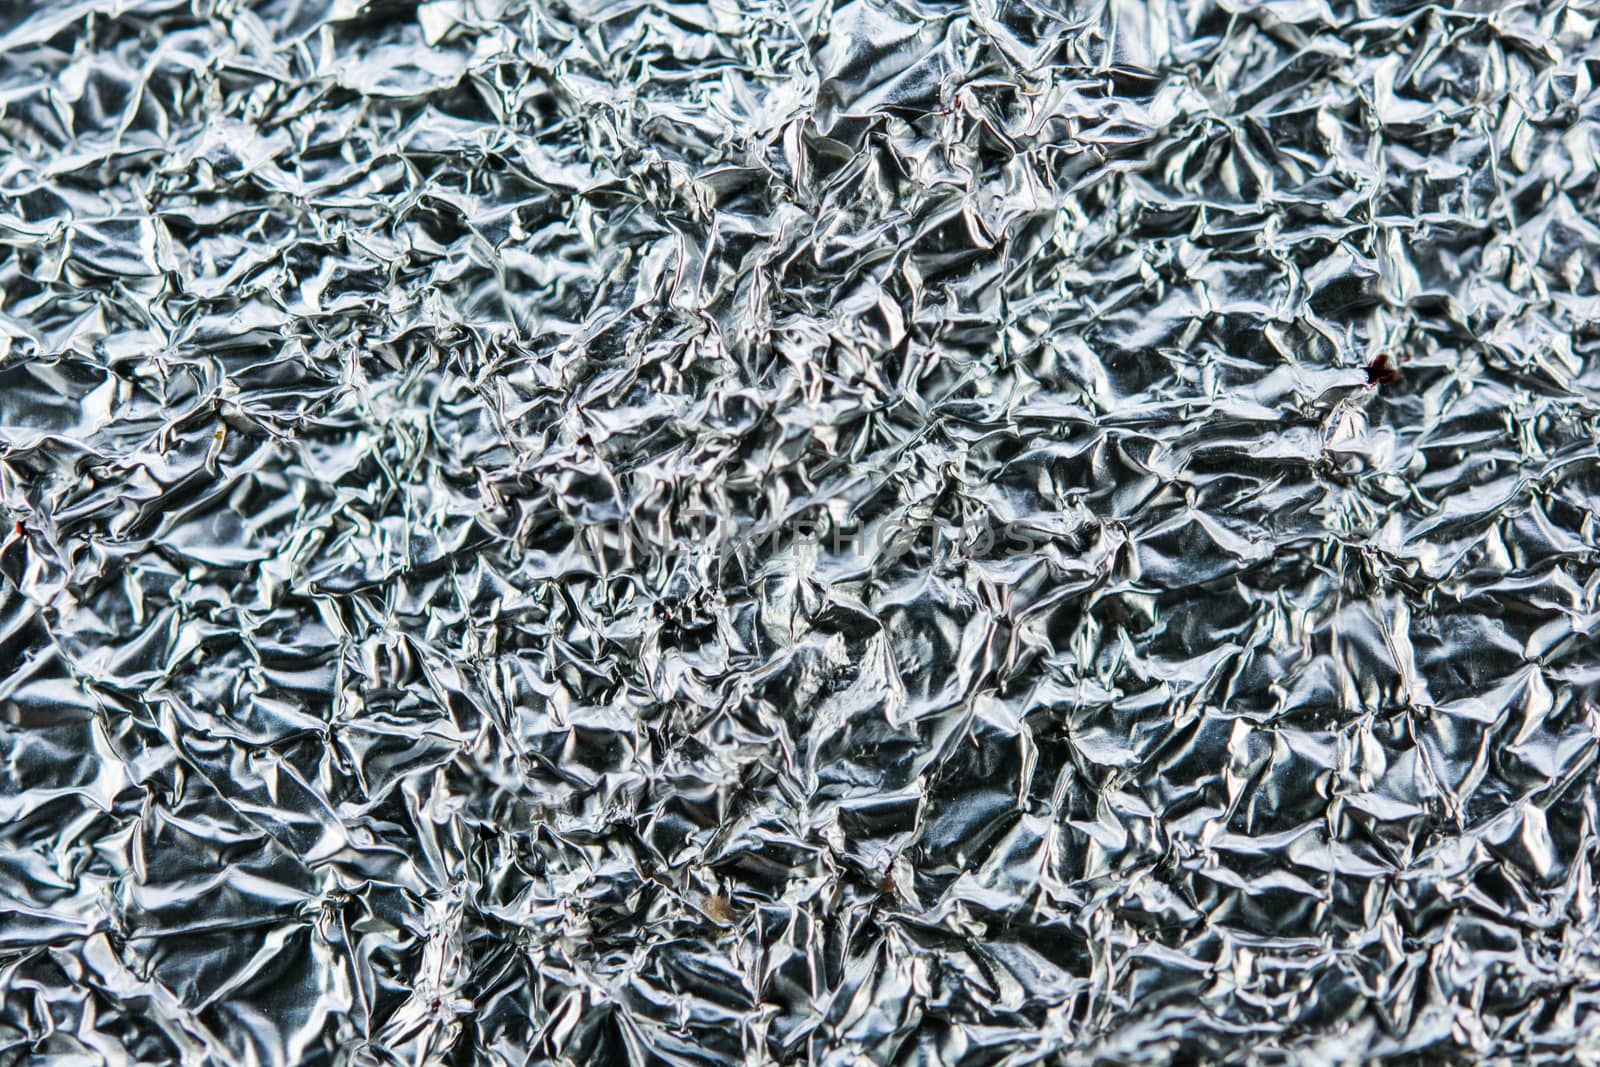 close up of aluminum foil texture background